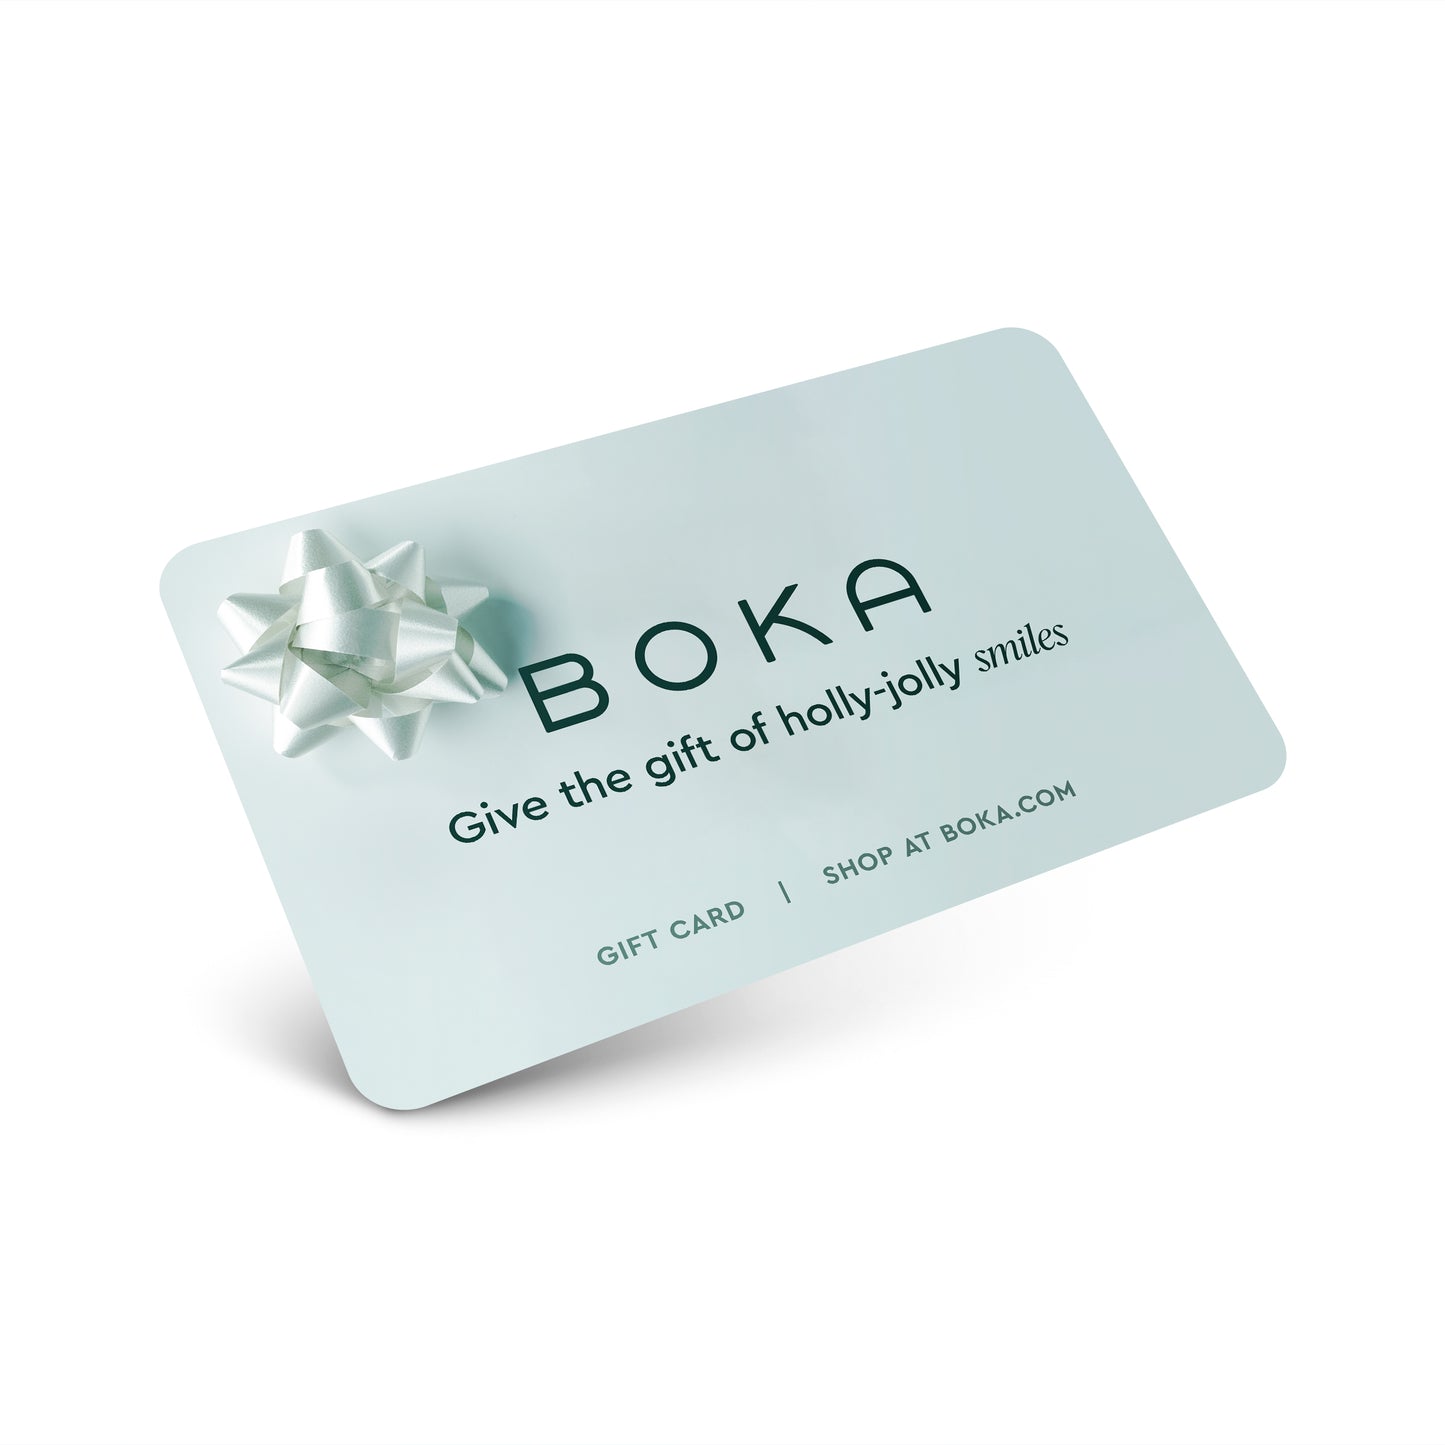 Boka E-Gift Card